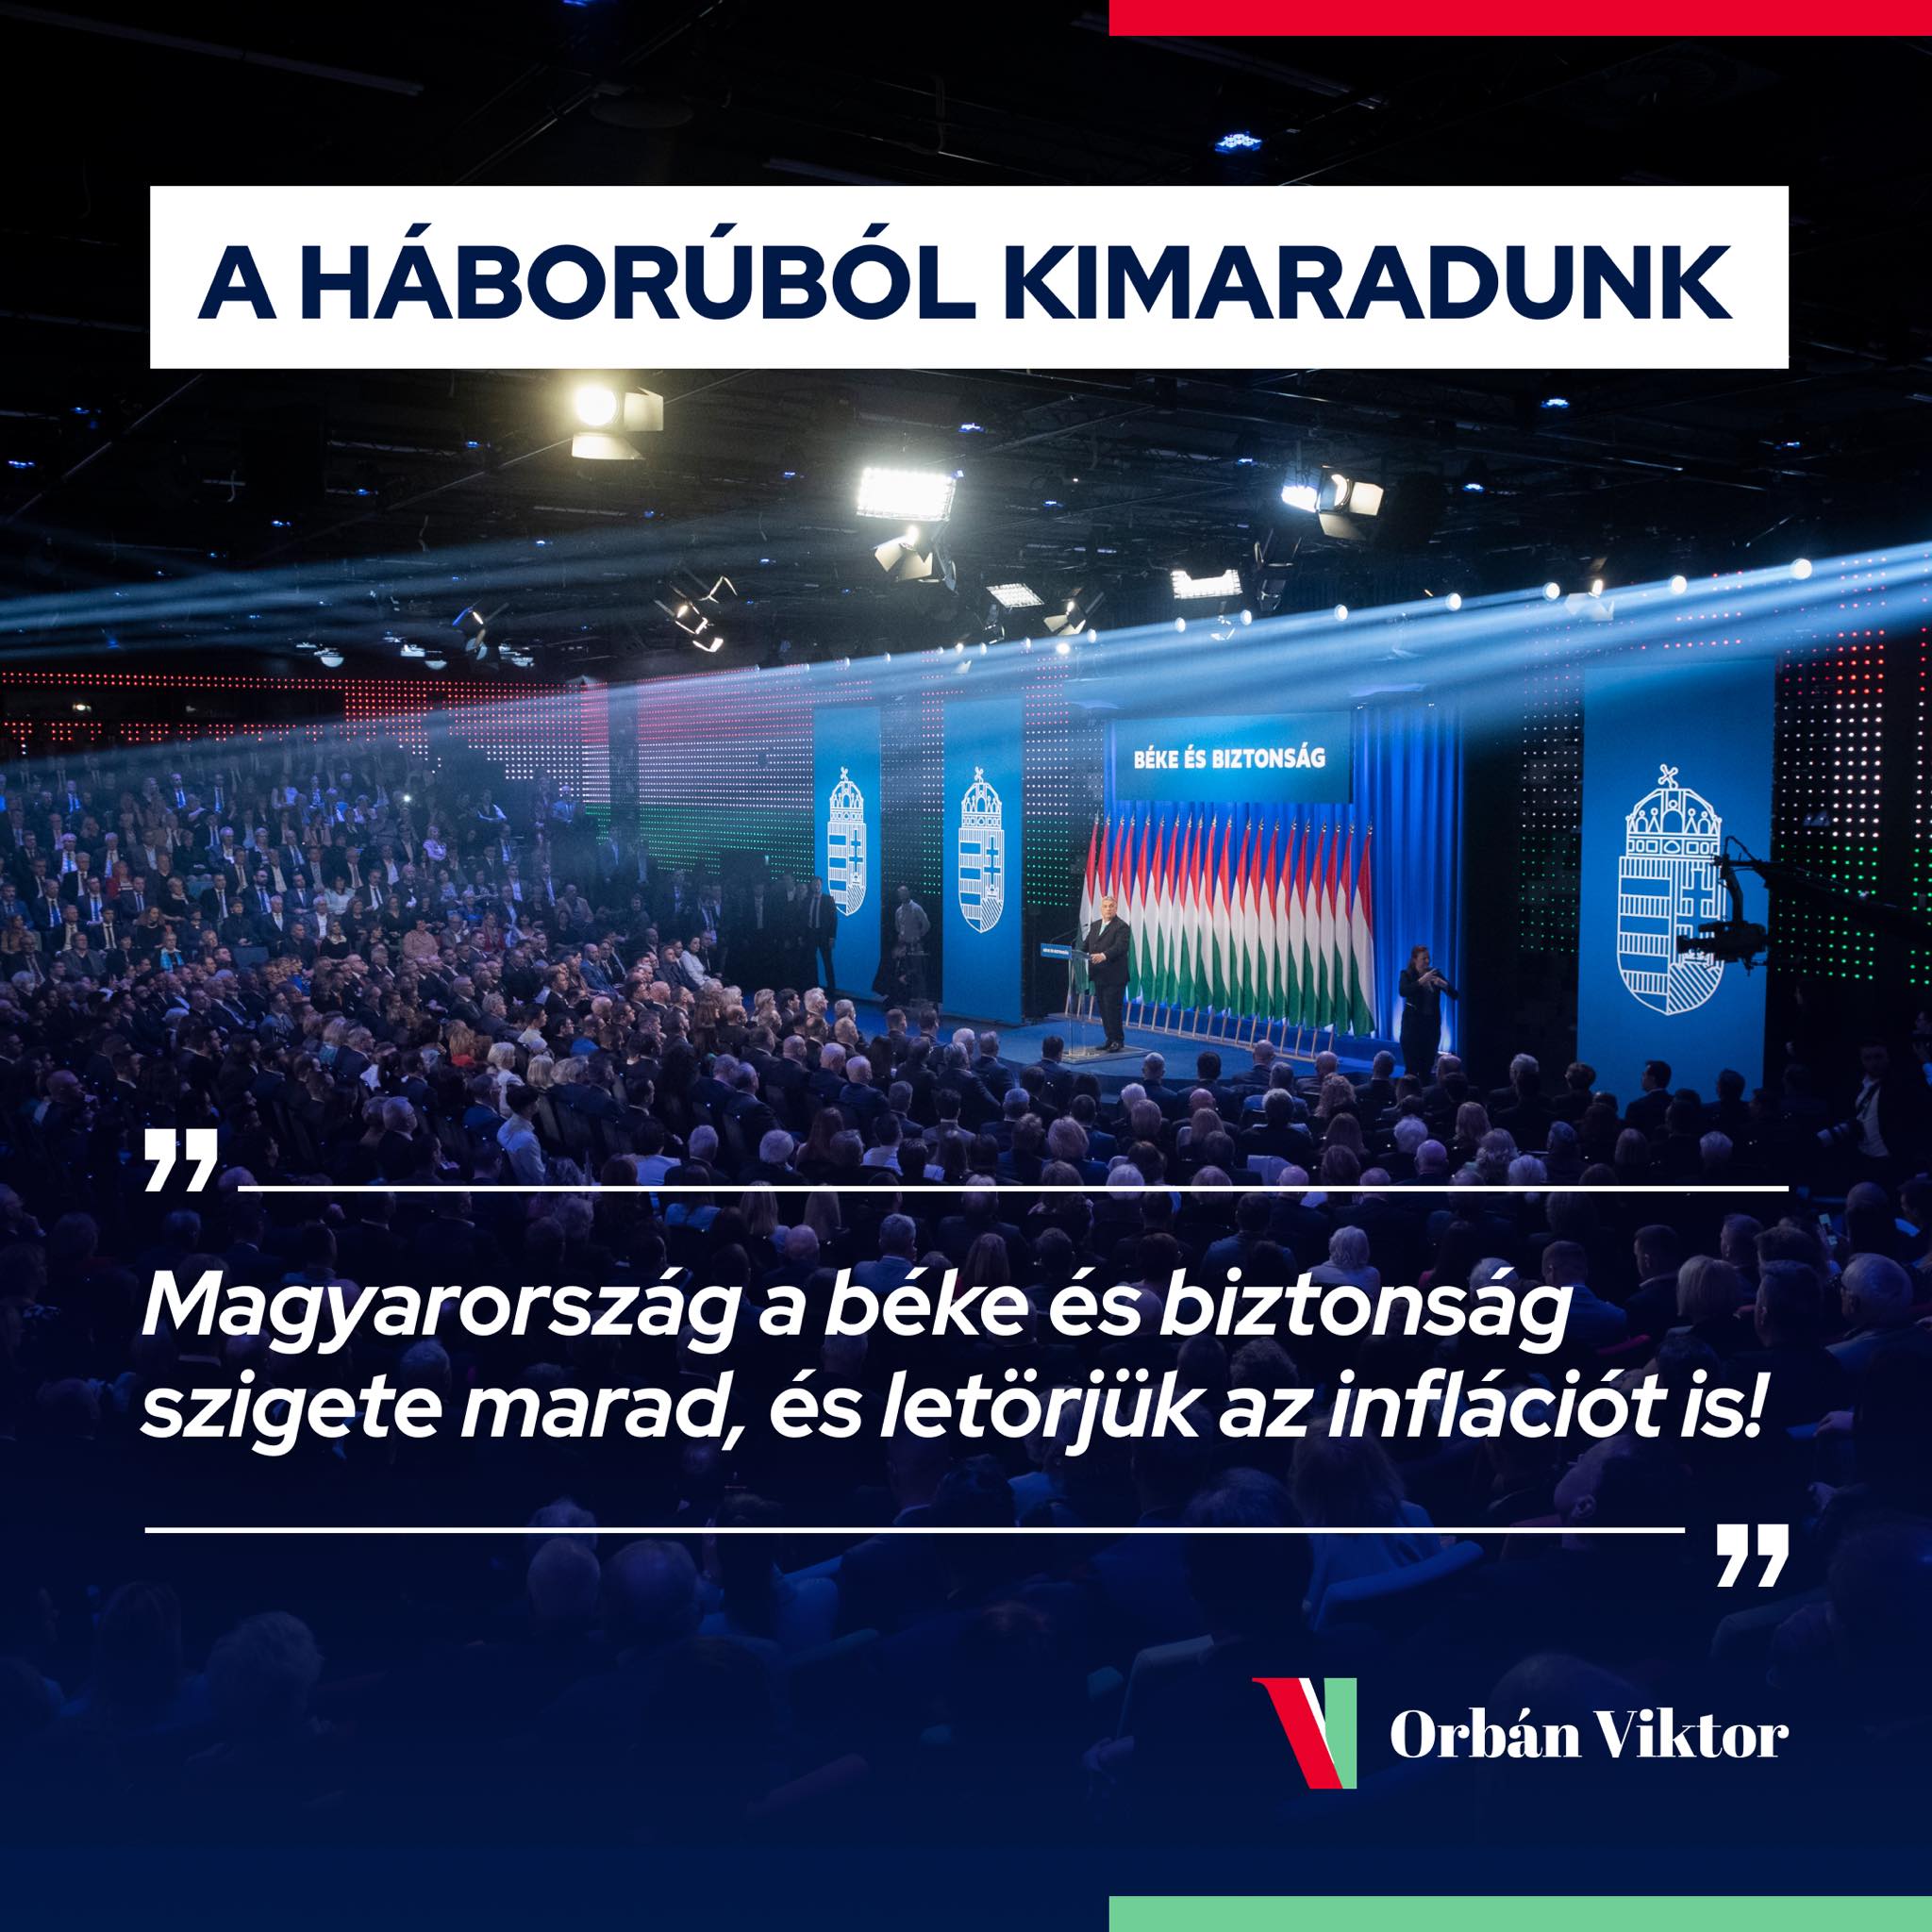 Orbán: NATO Membership ‘Vital to Hungary’